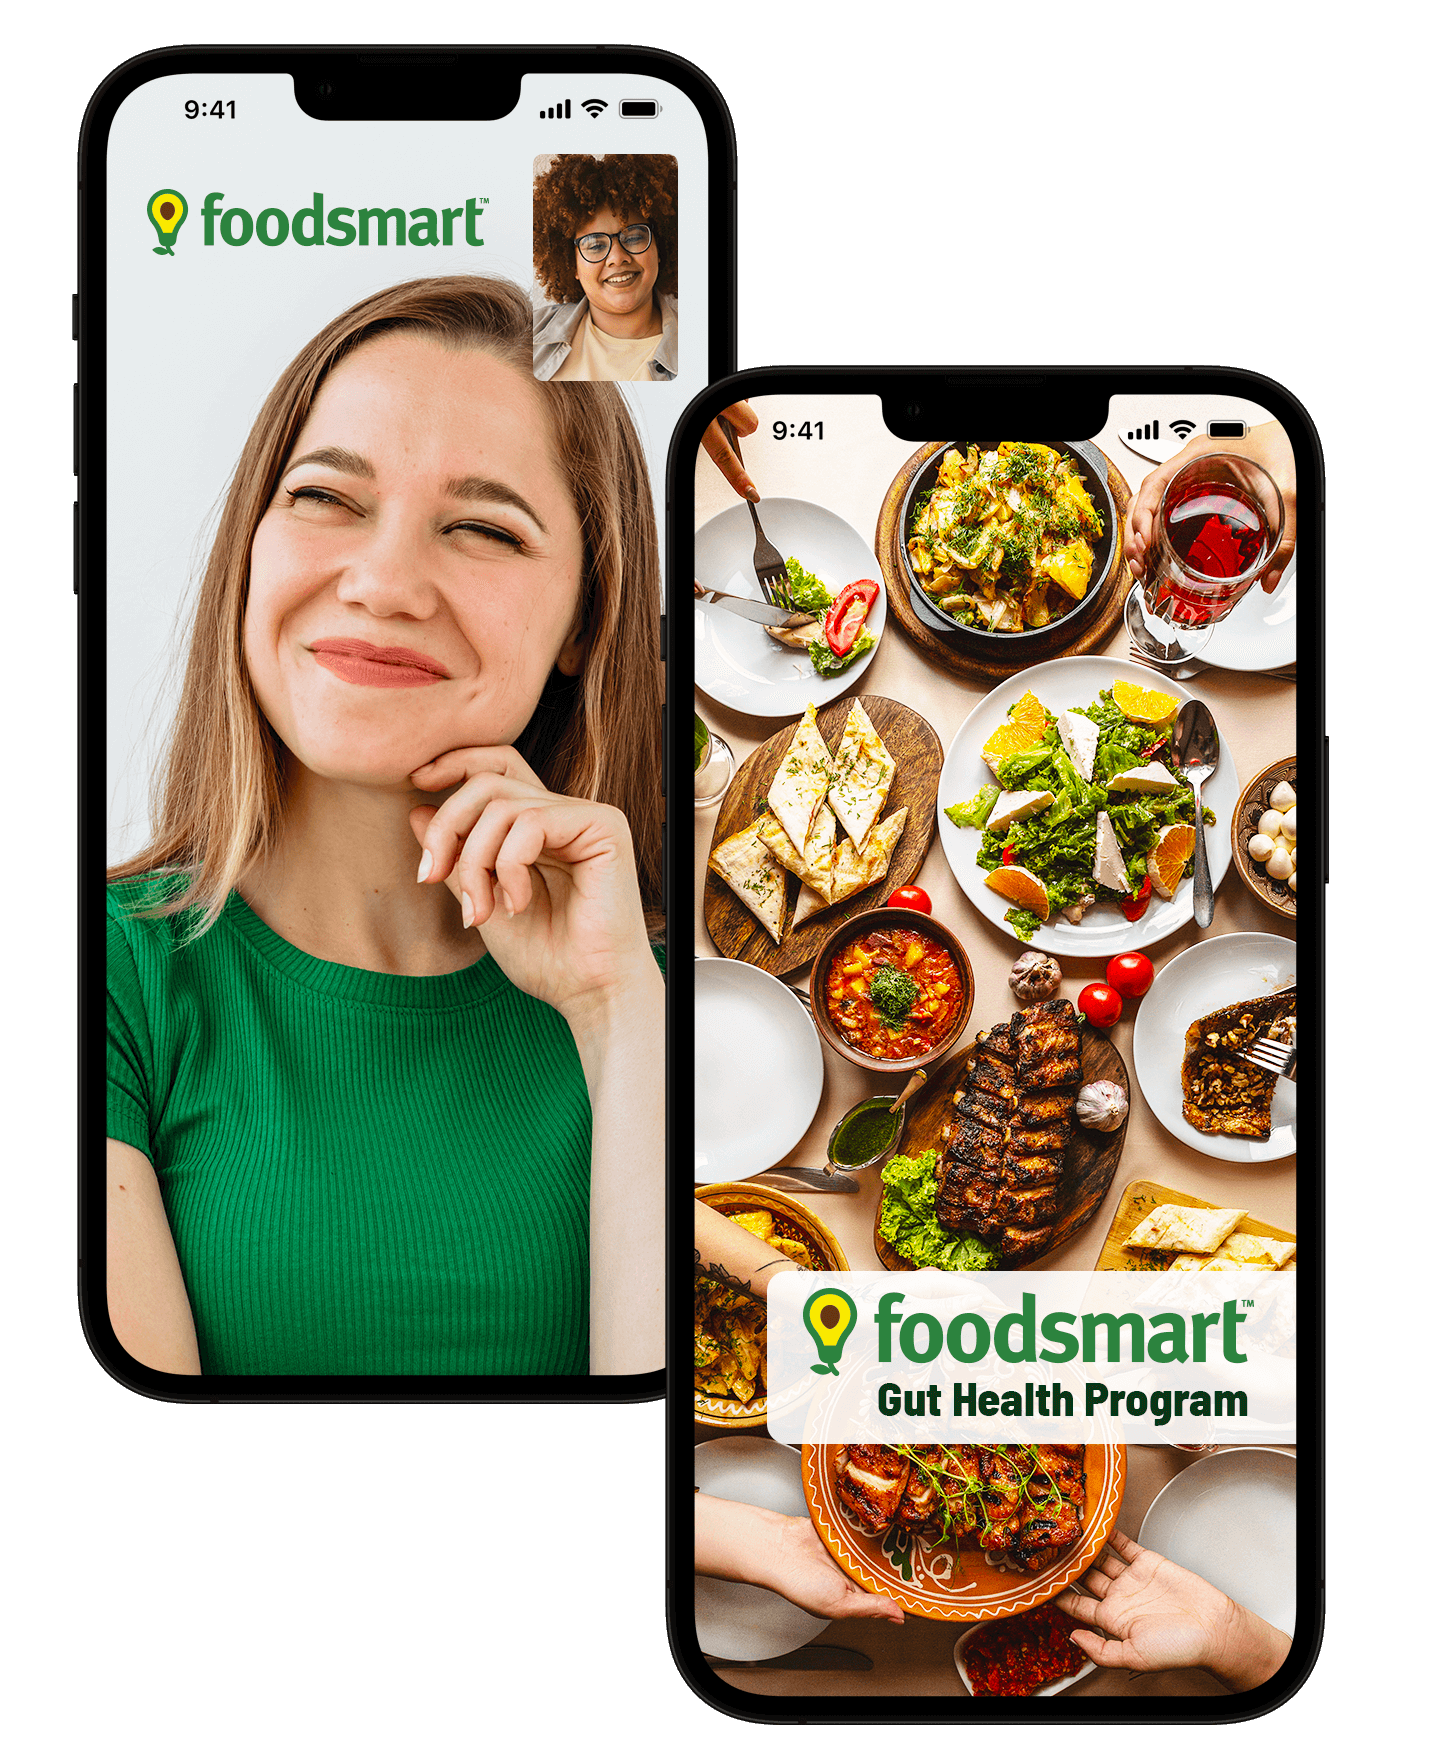 Images of the Foodsmart Mobile App